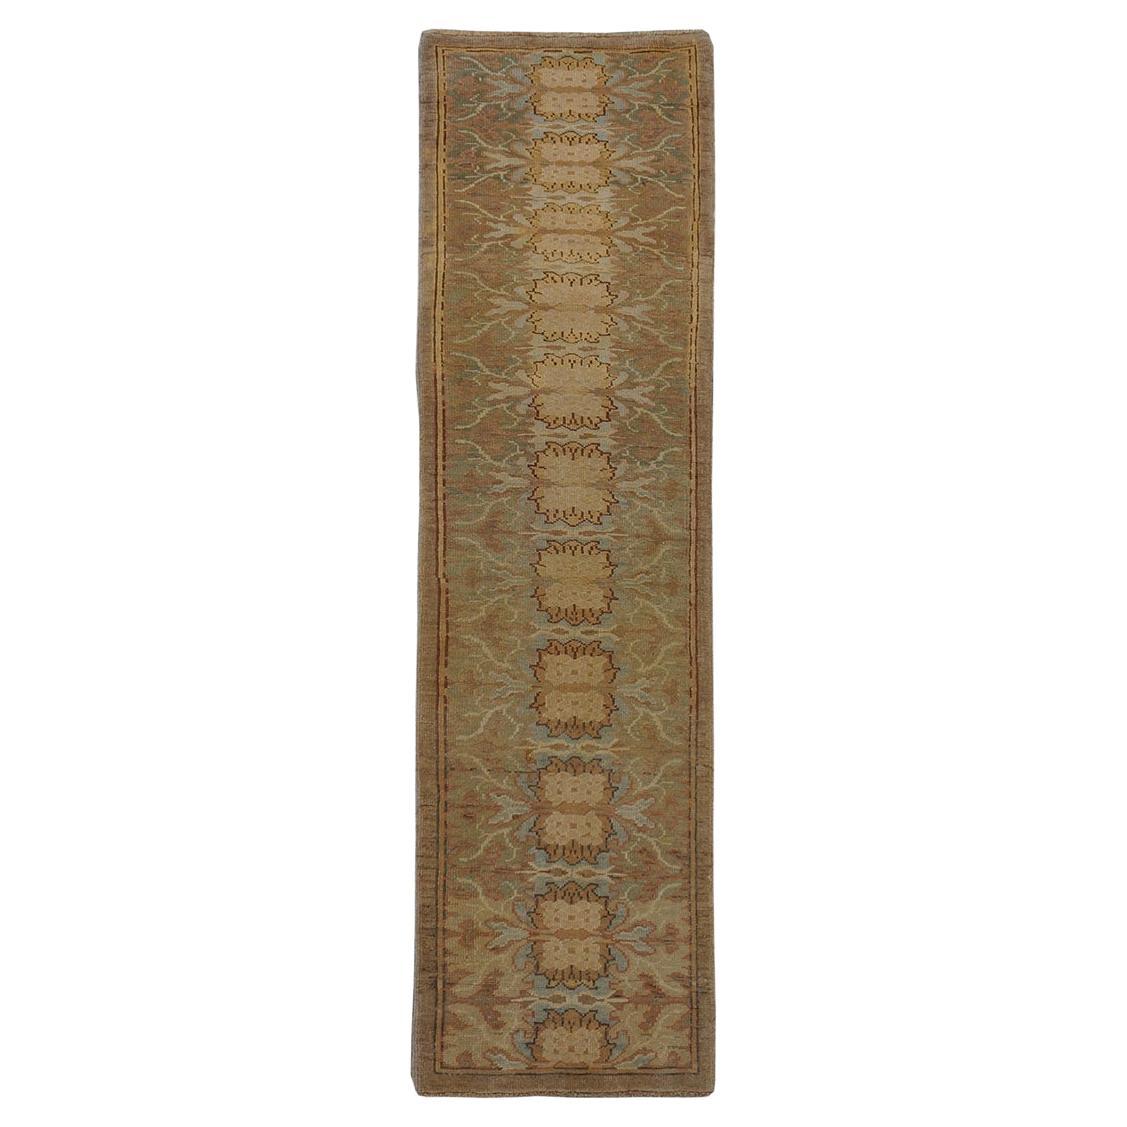 21st Century William Morris Donegal Carpet 3x10 Tan, Blue & Ivory Hall Runner